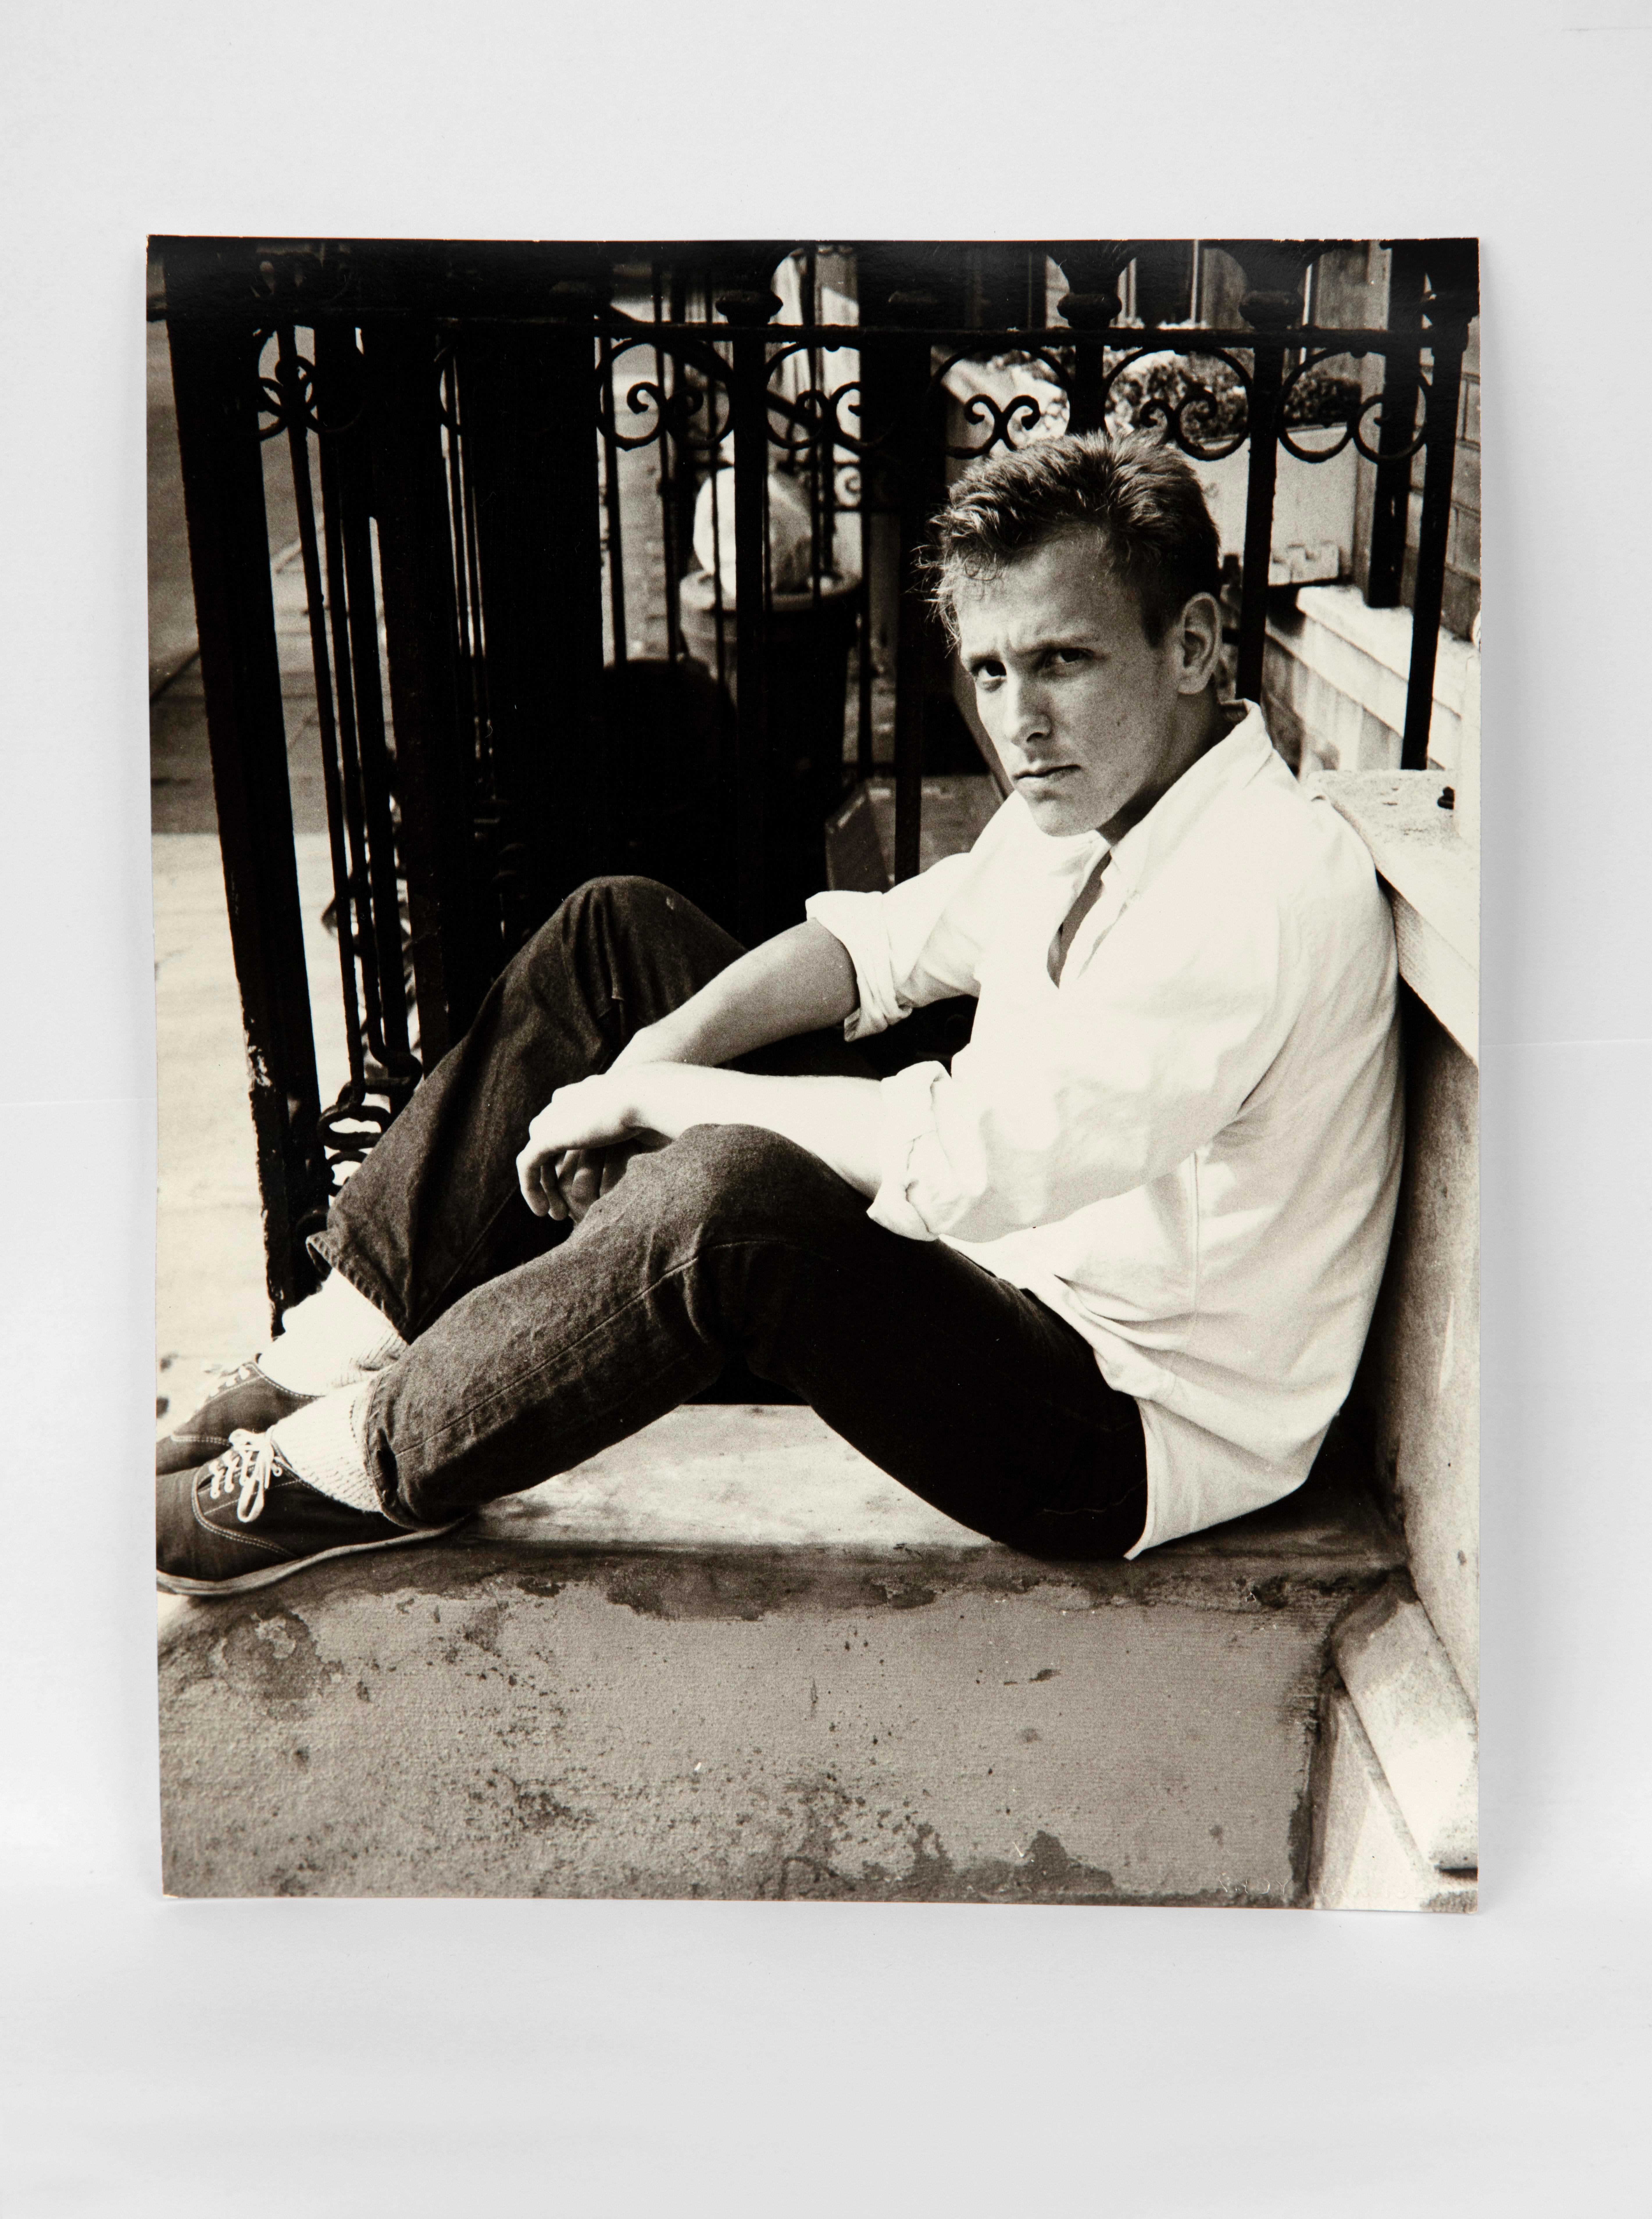 Andy Warhol Portrait Photograph – Sitzender junger Mann